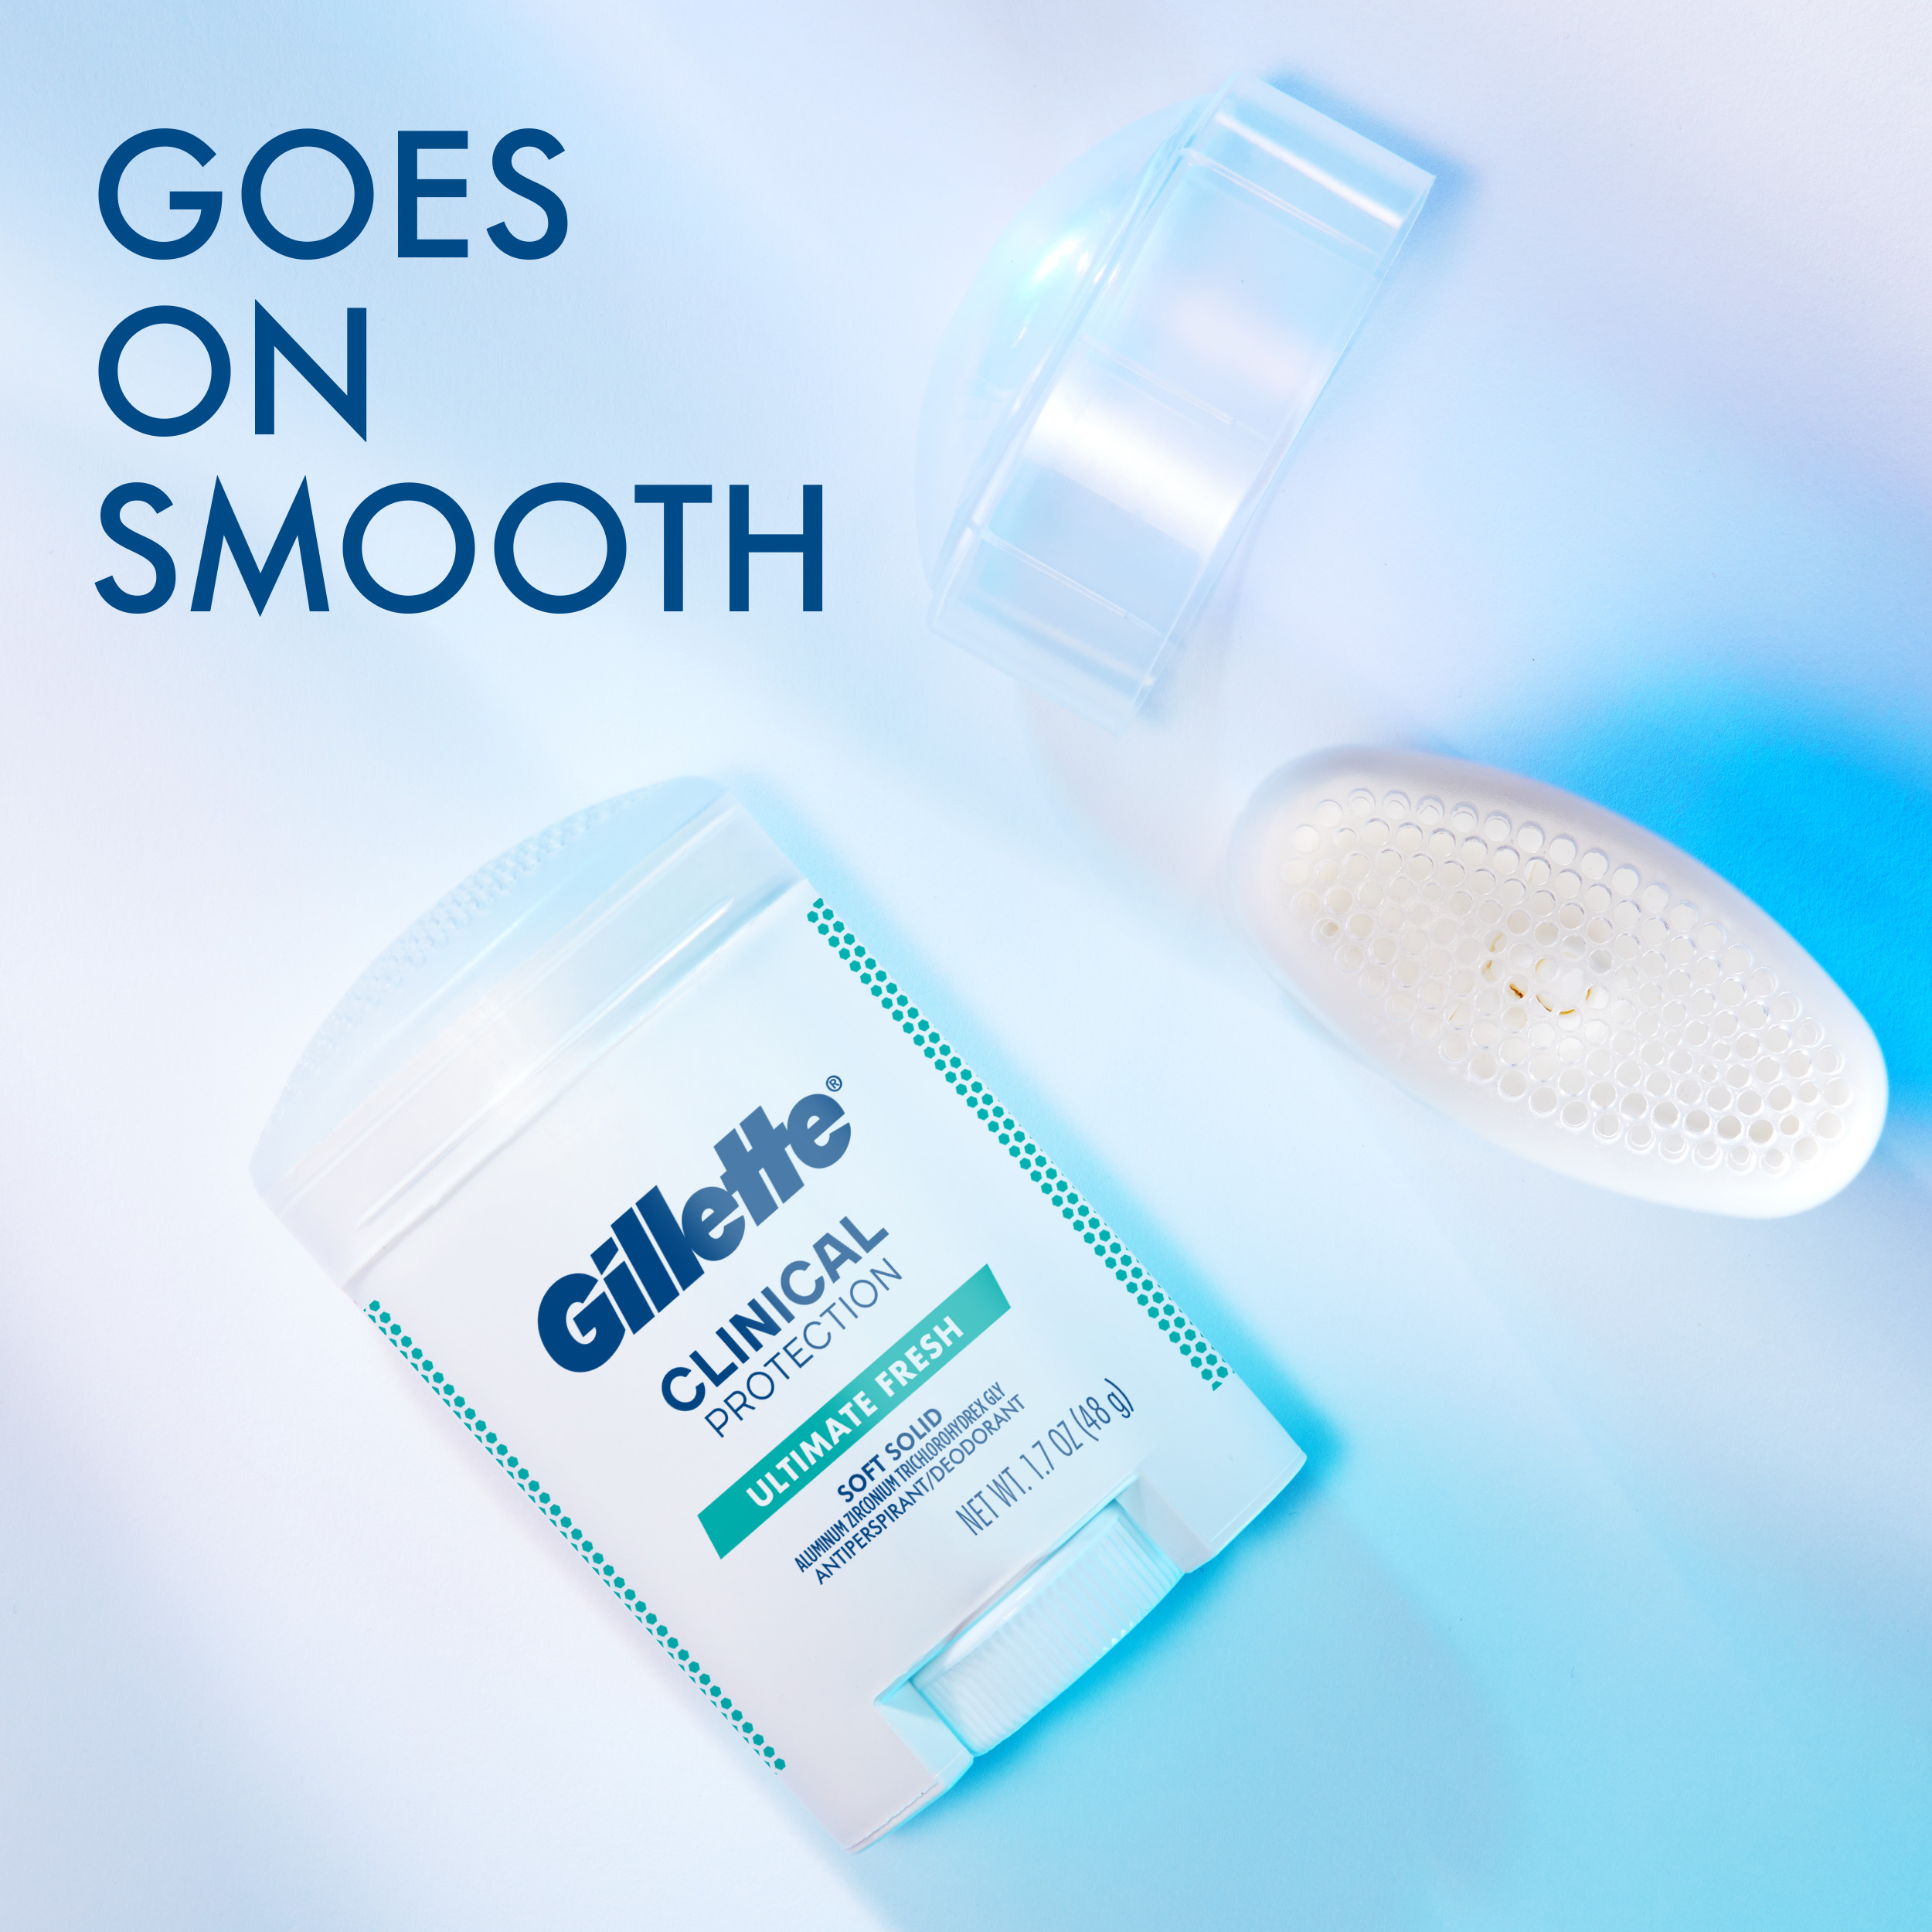 Gillette Antiperspirant Deodorant for Men, Clinical Soft Solid, Ultimate Fresh, 72 Hr. Sweat Protection, 2.6 oz - image 2 of 7